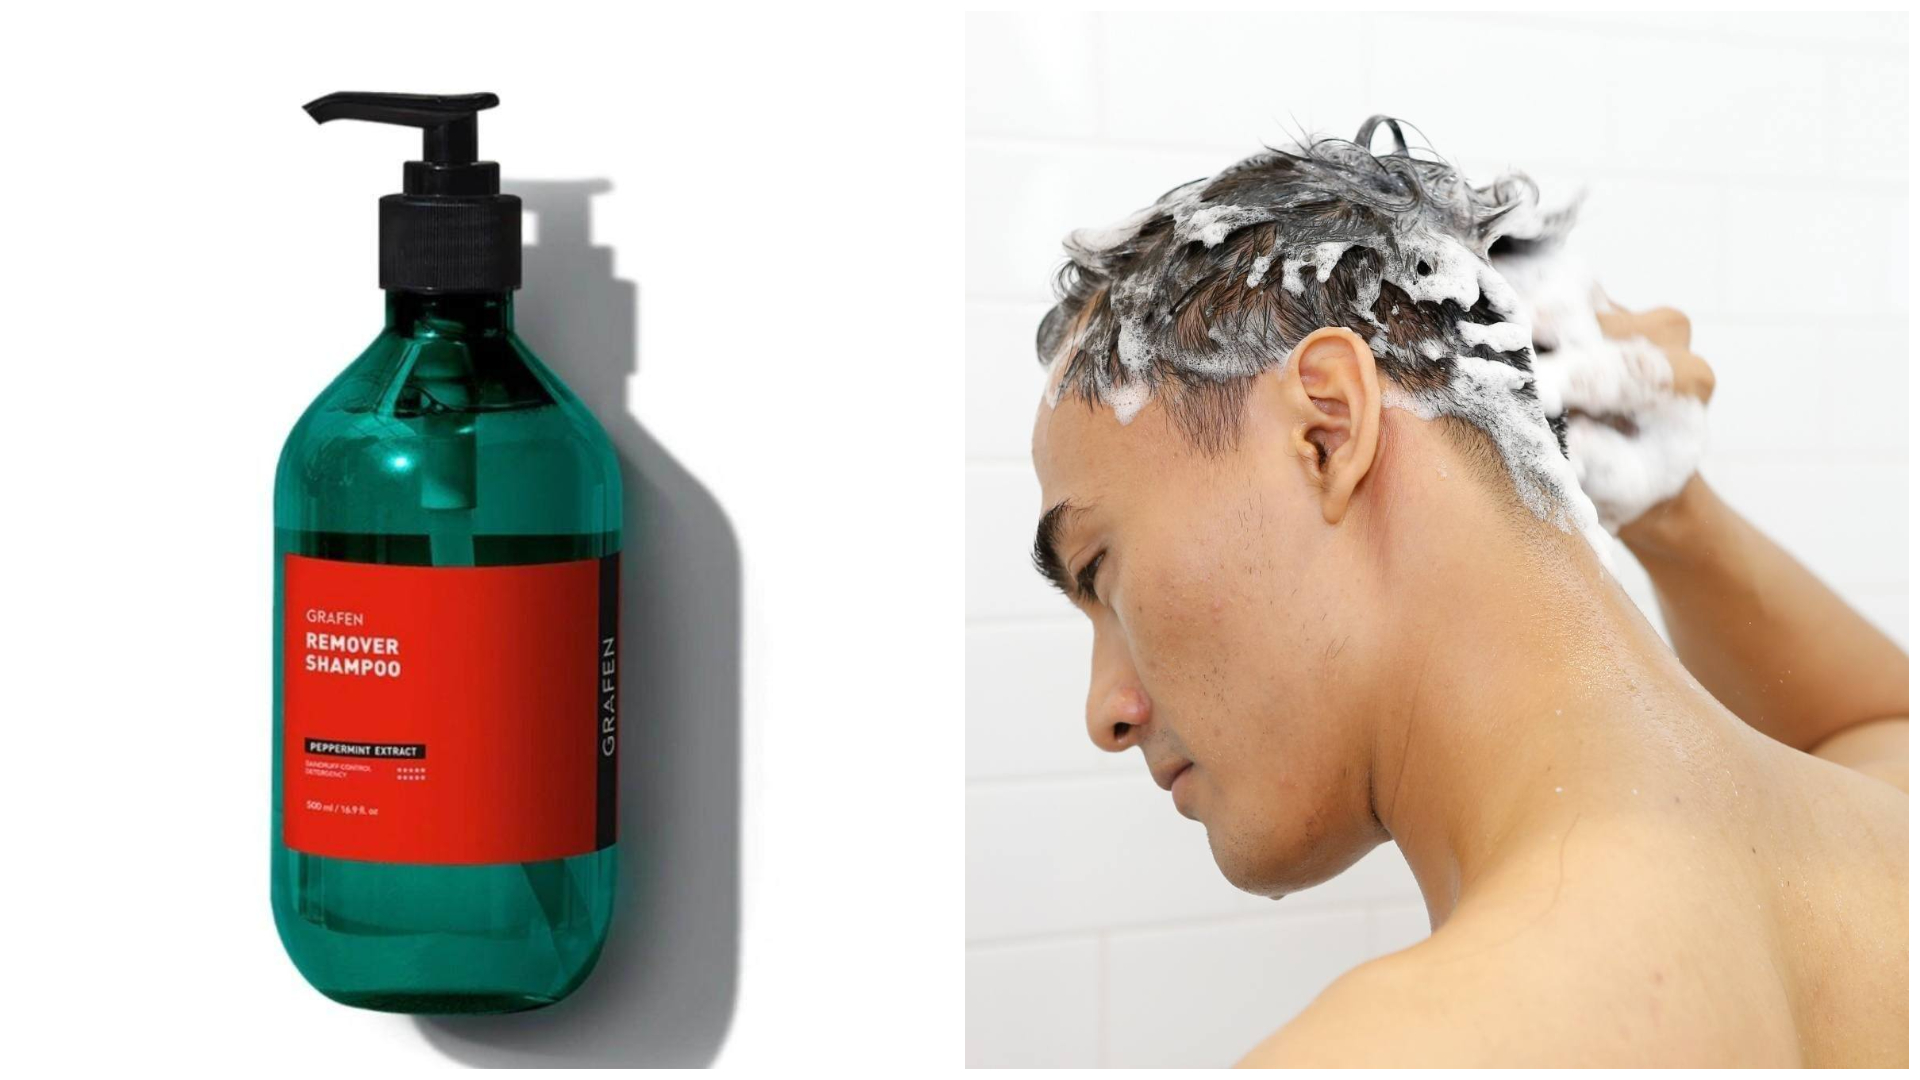 Grafen Remover Shampoo Menthol Cooling (Anti-Dandruff Care)